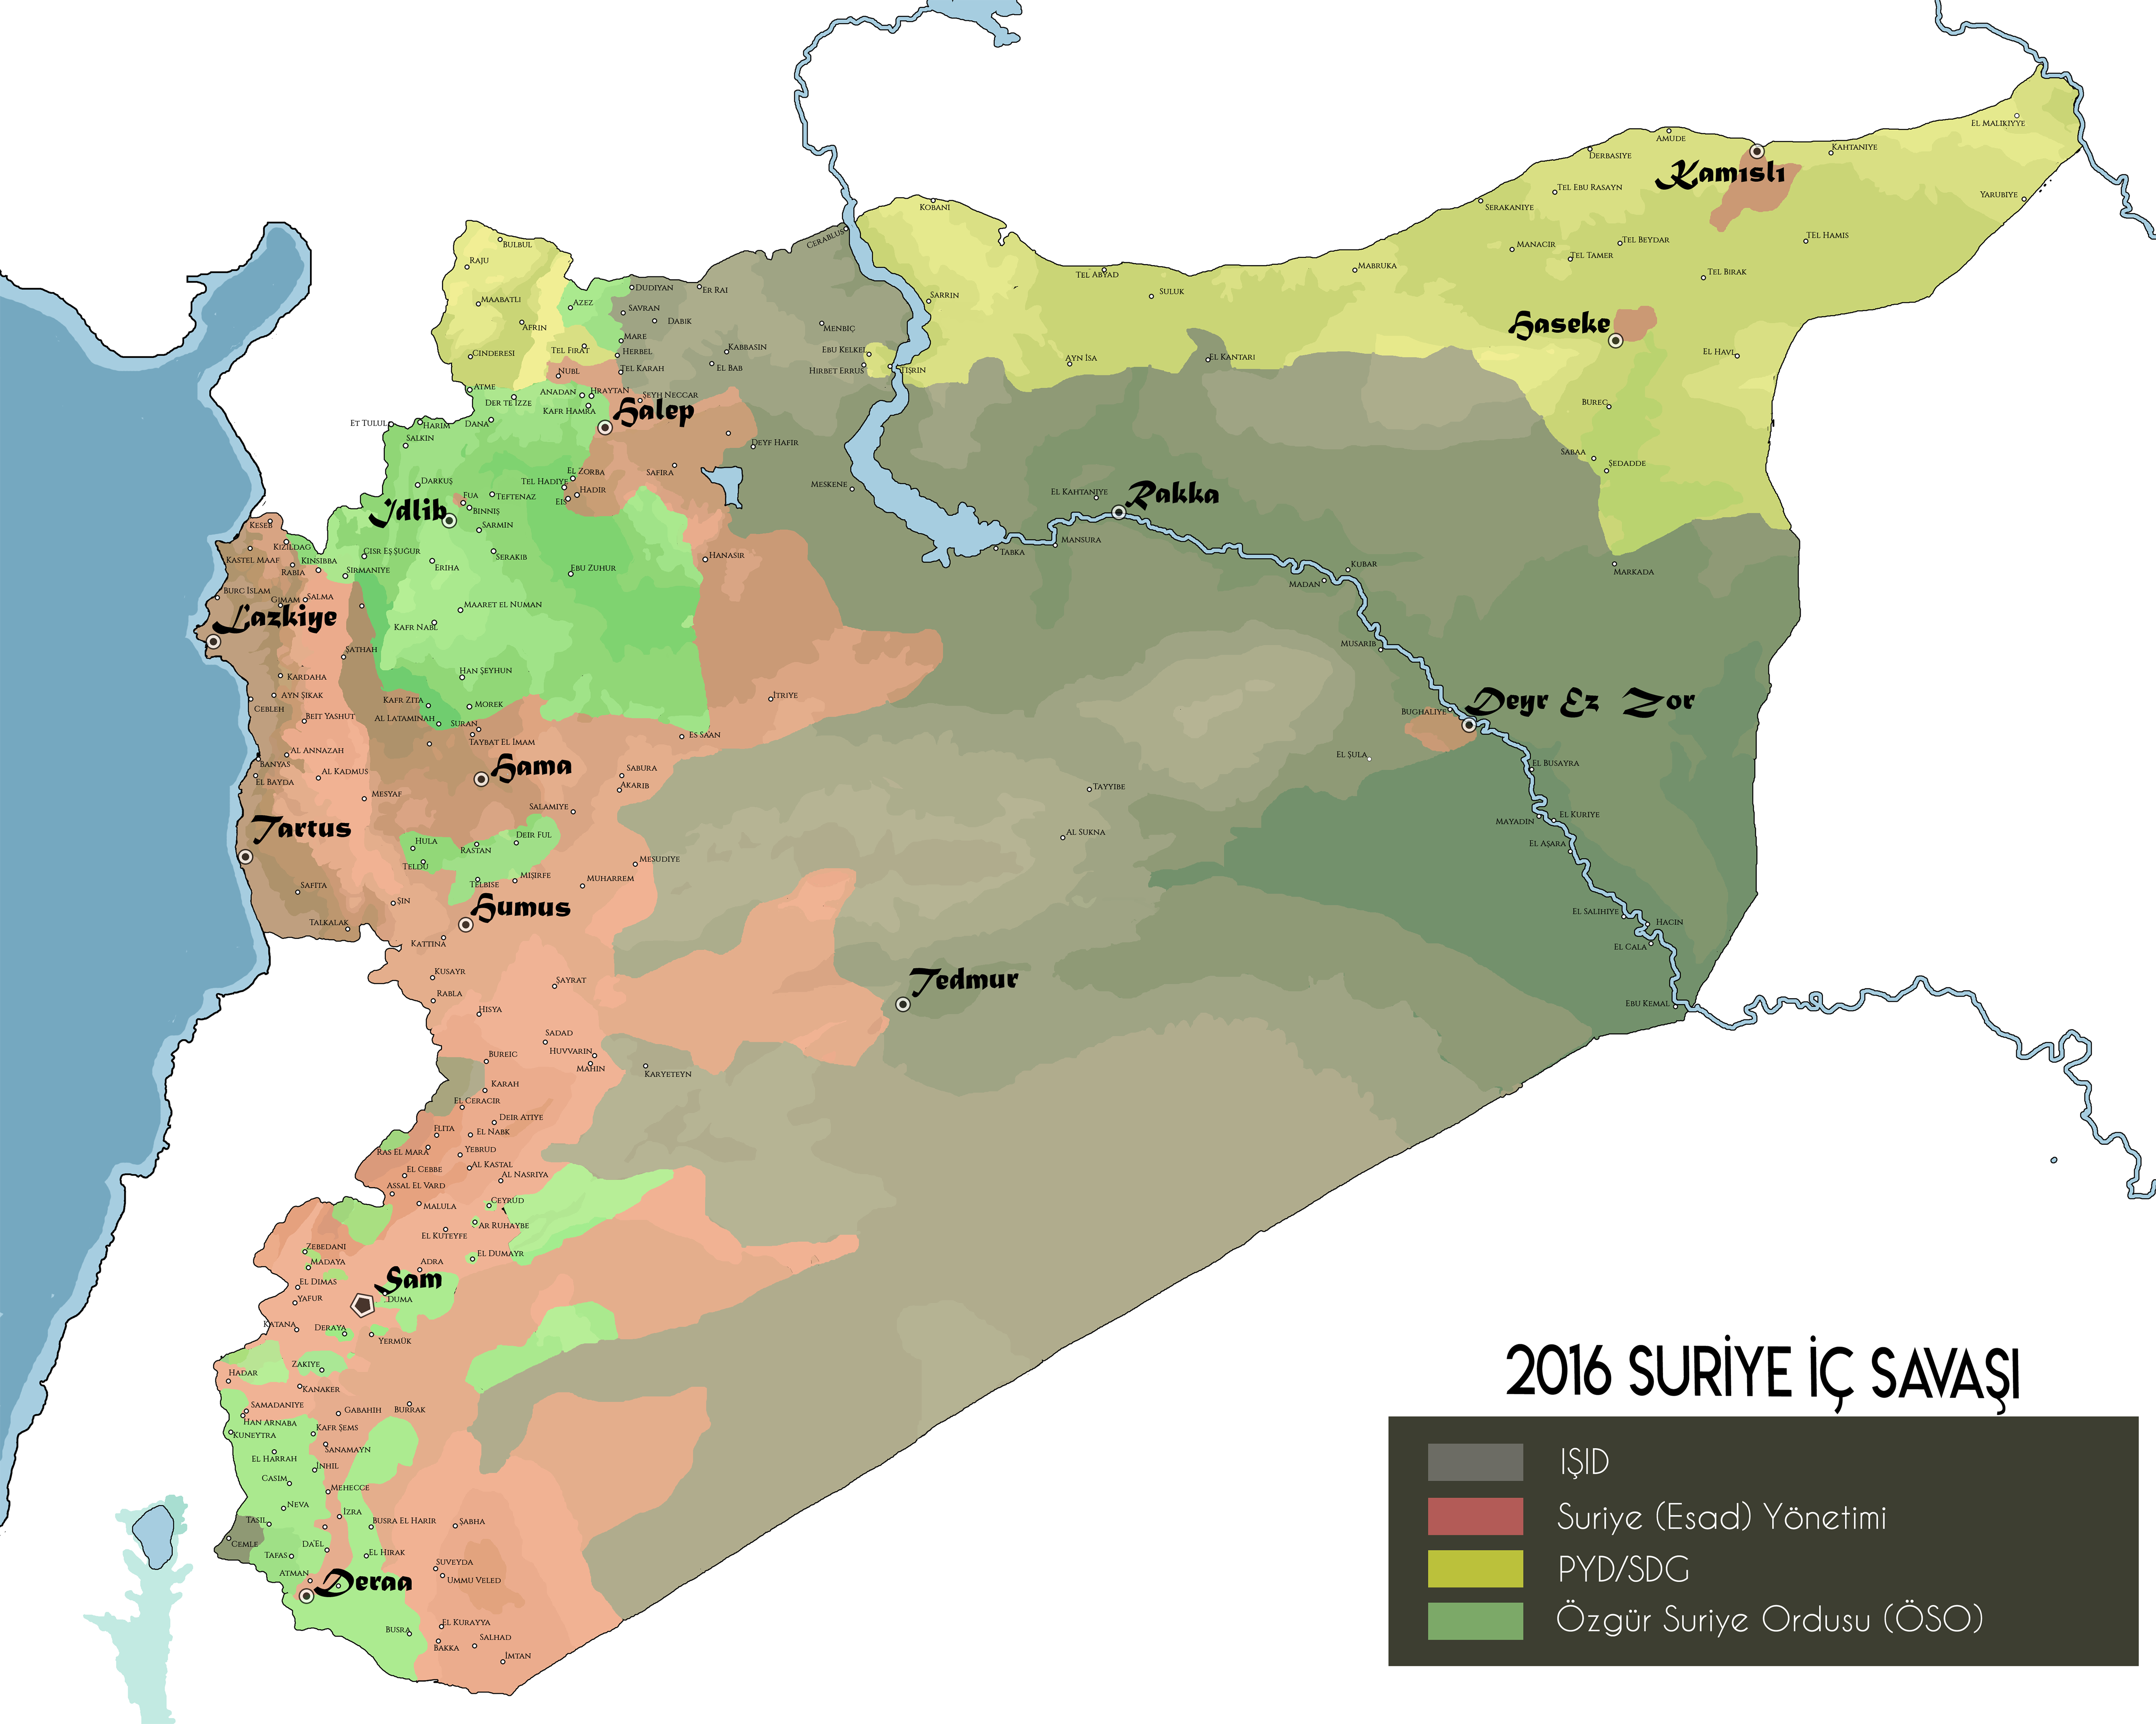 Syria Political Map 2016